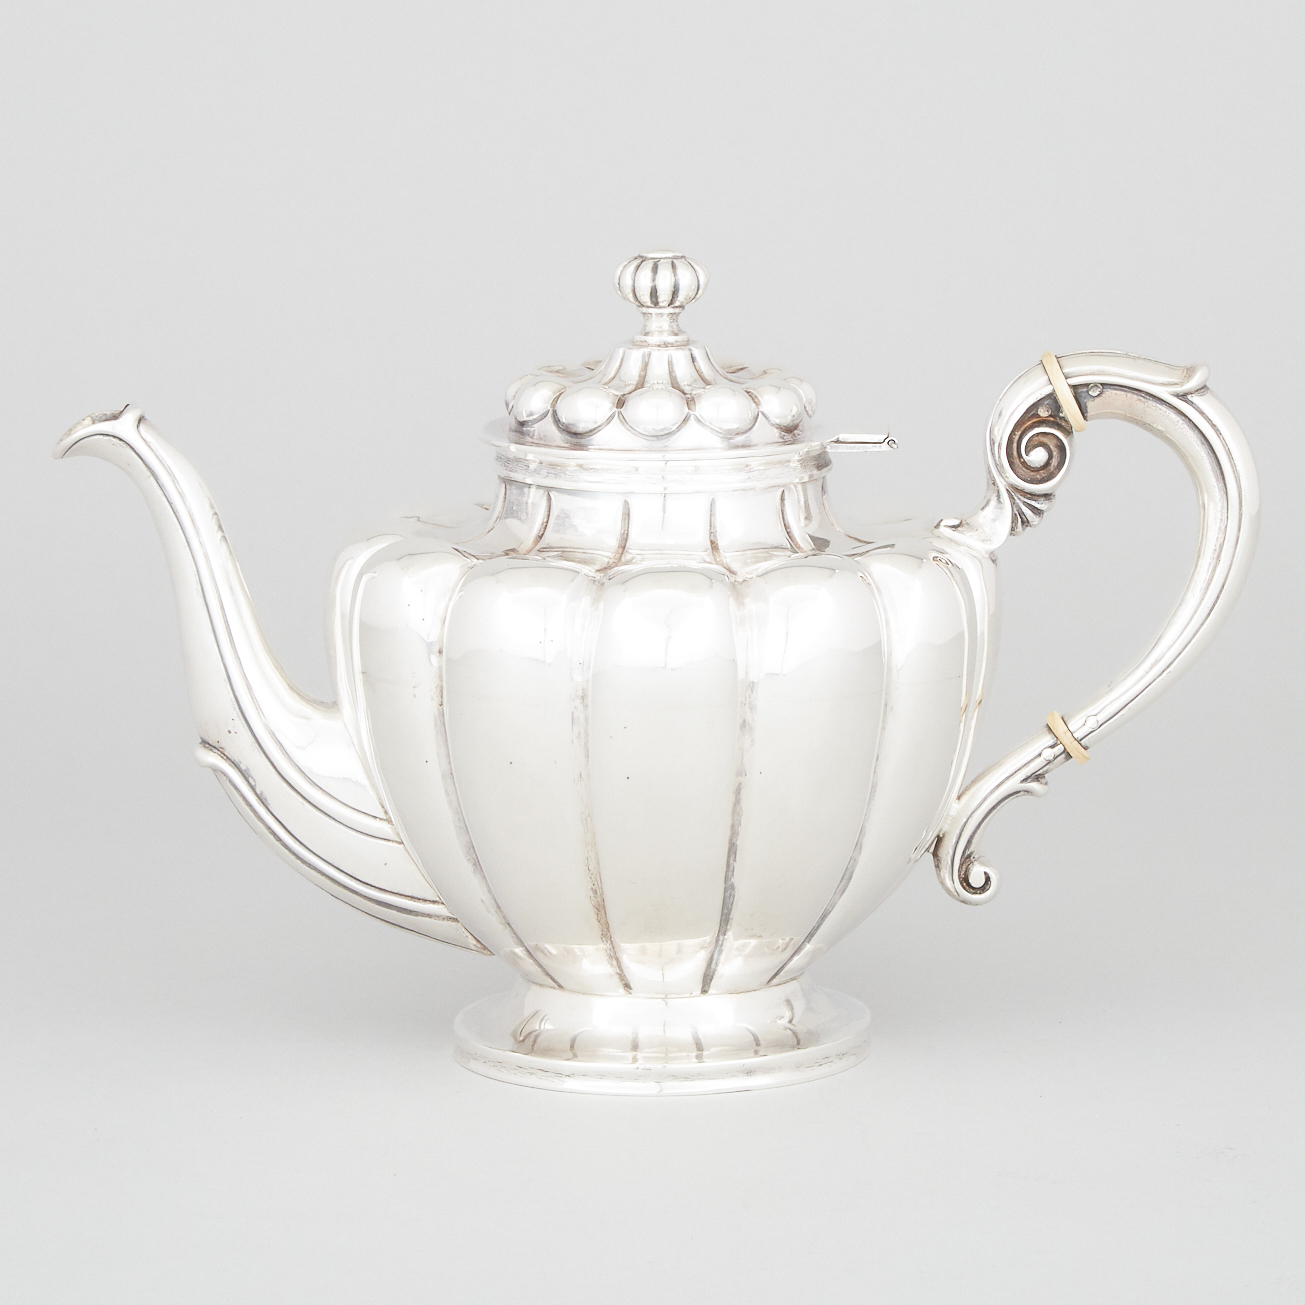 Mexican Silver Teapot, Sanborns, Mexico City, mid-20th century